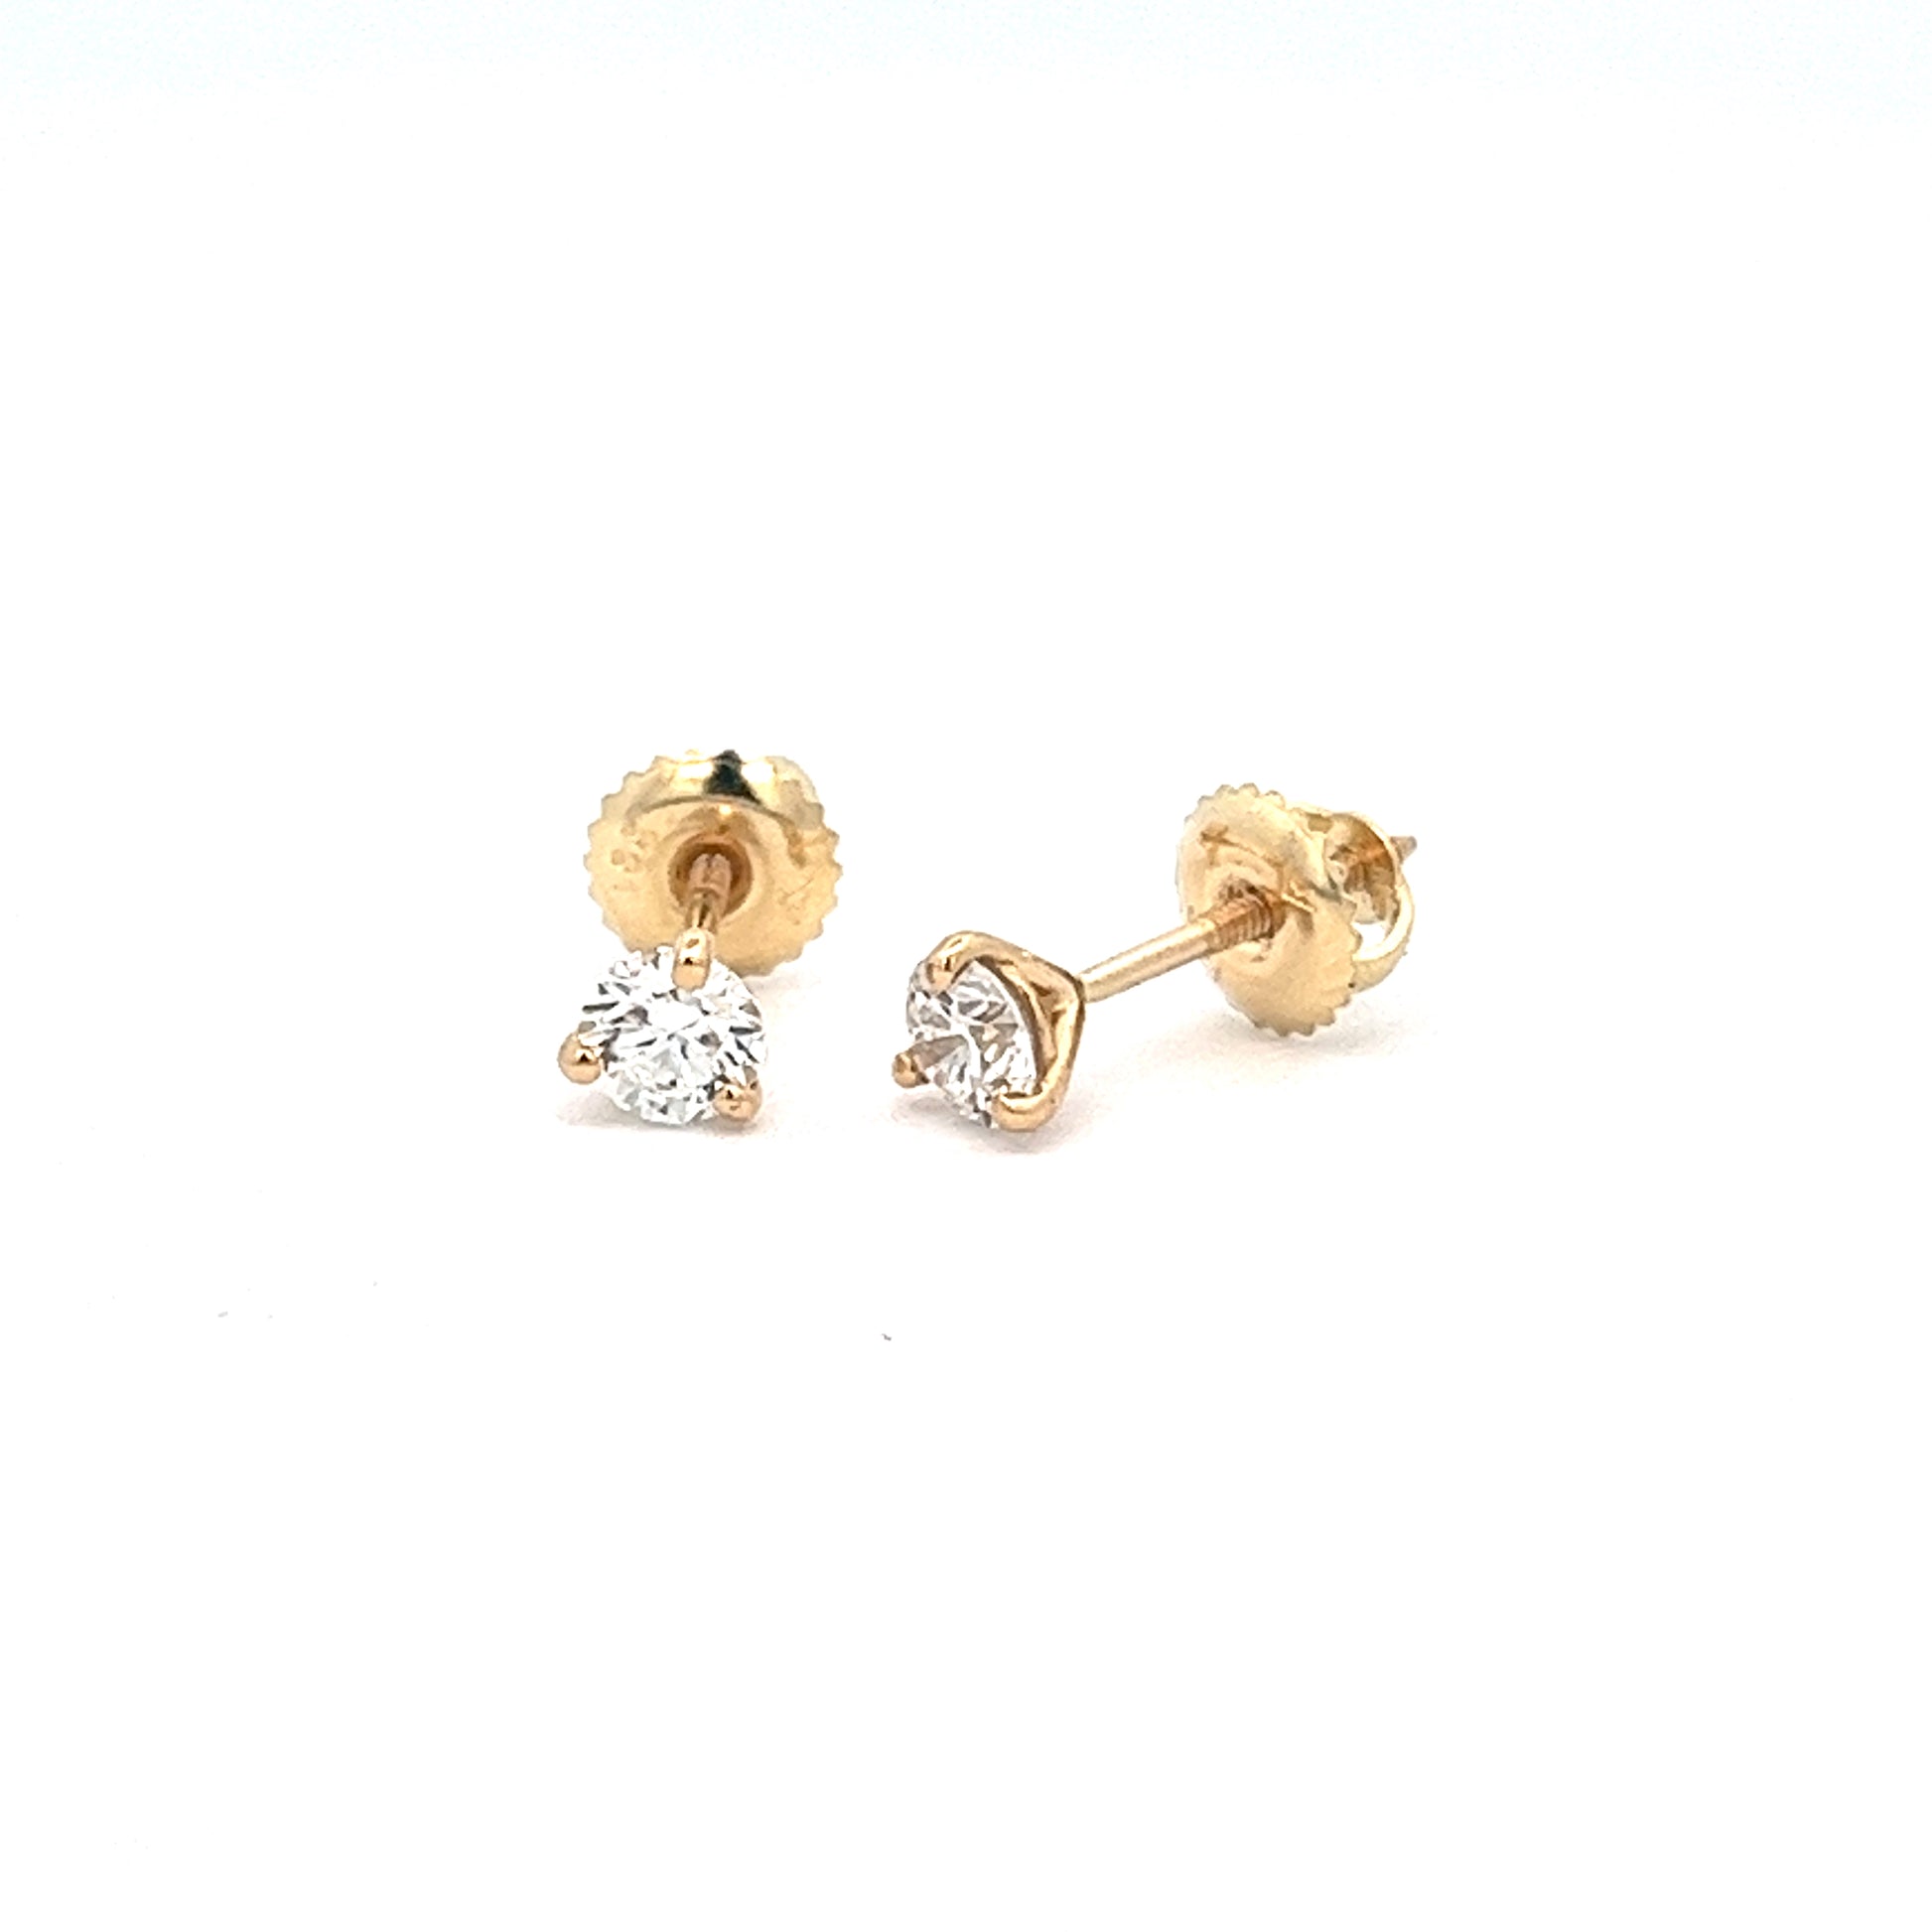 0.50ct total weight diamond stud earrings